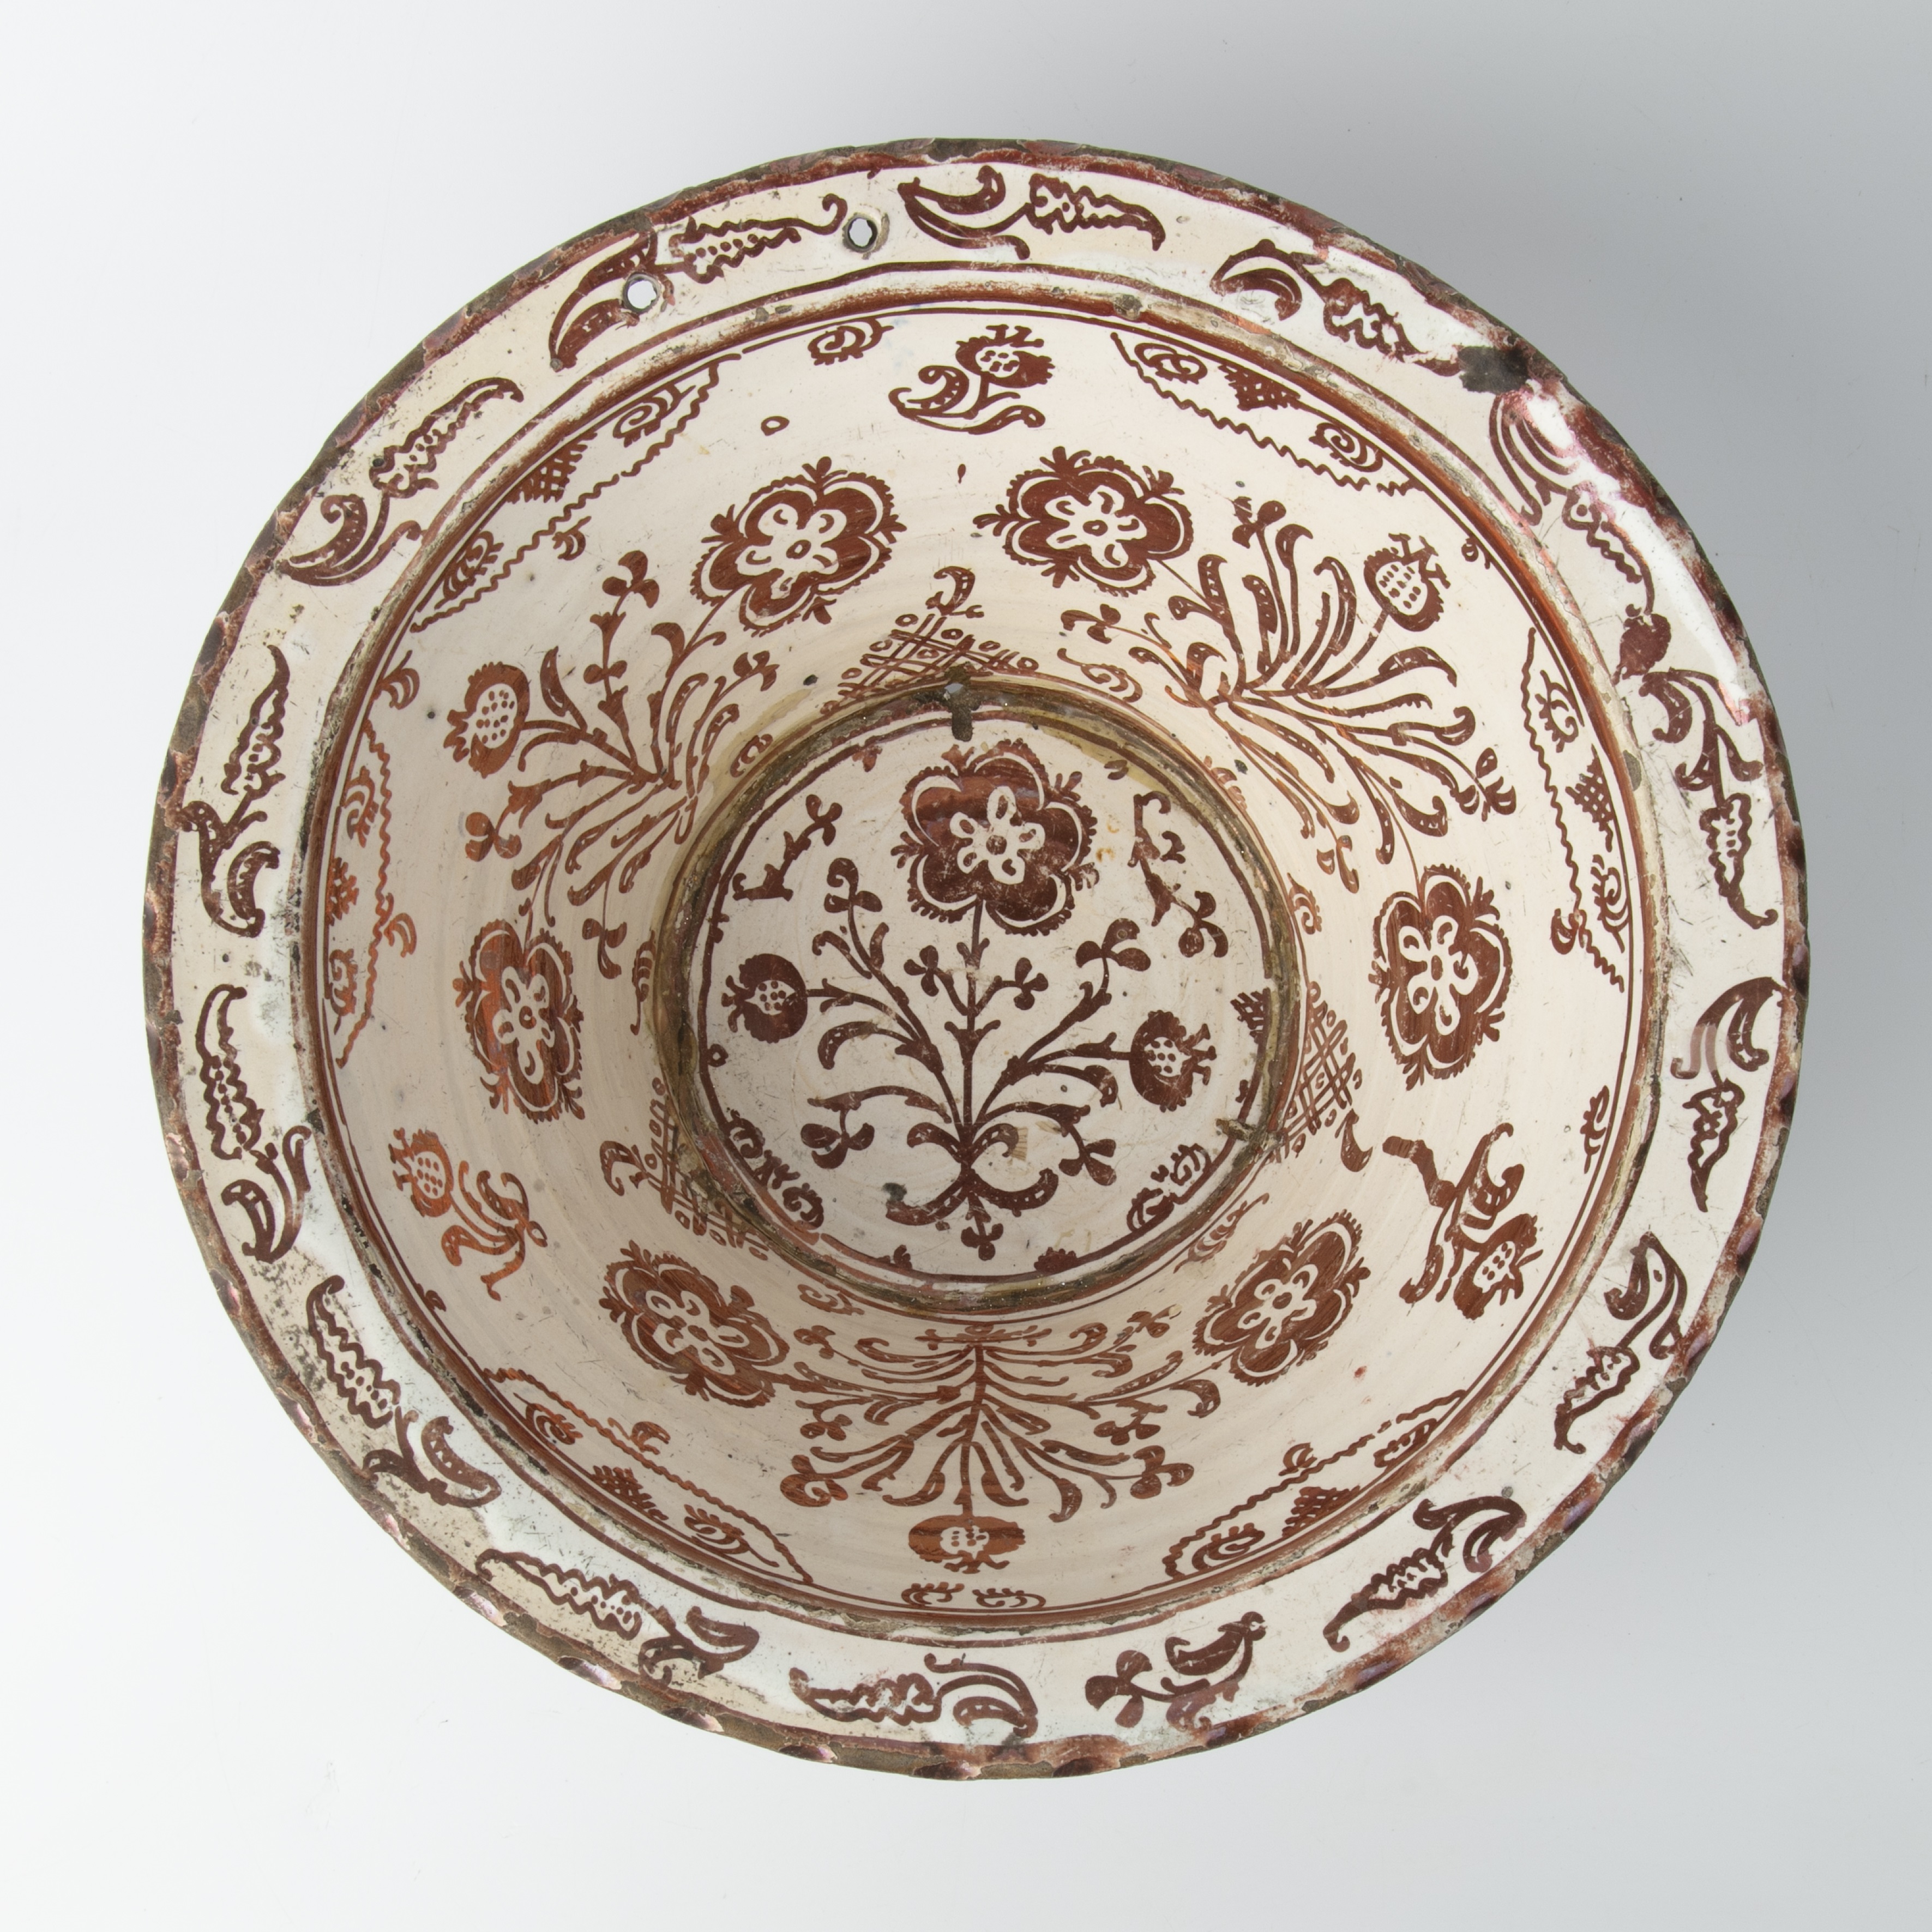 A 17th/18th century Hispano-Moresque copper lustre bowl with foliate decoration, 30cm diameter 12. - Image 2 of 4